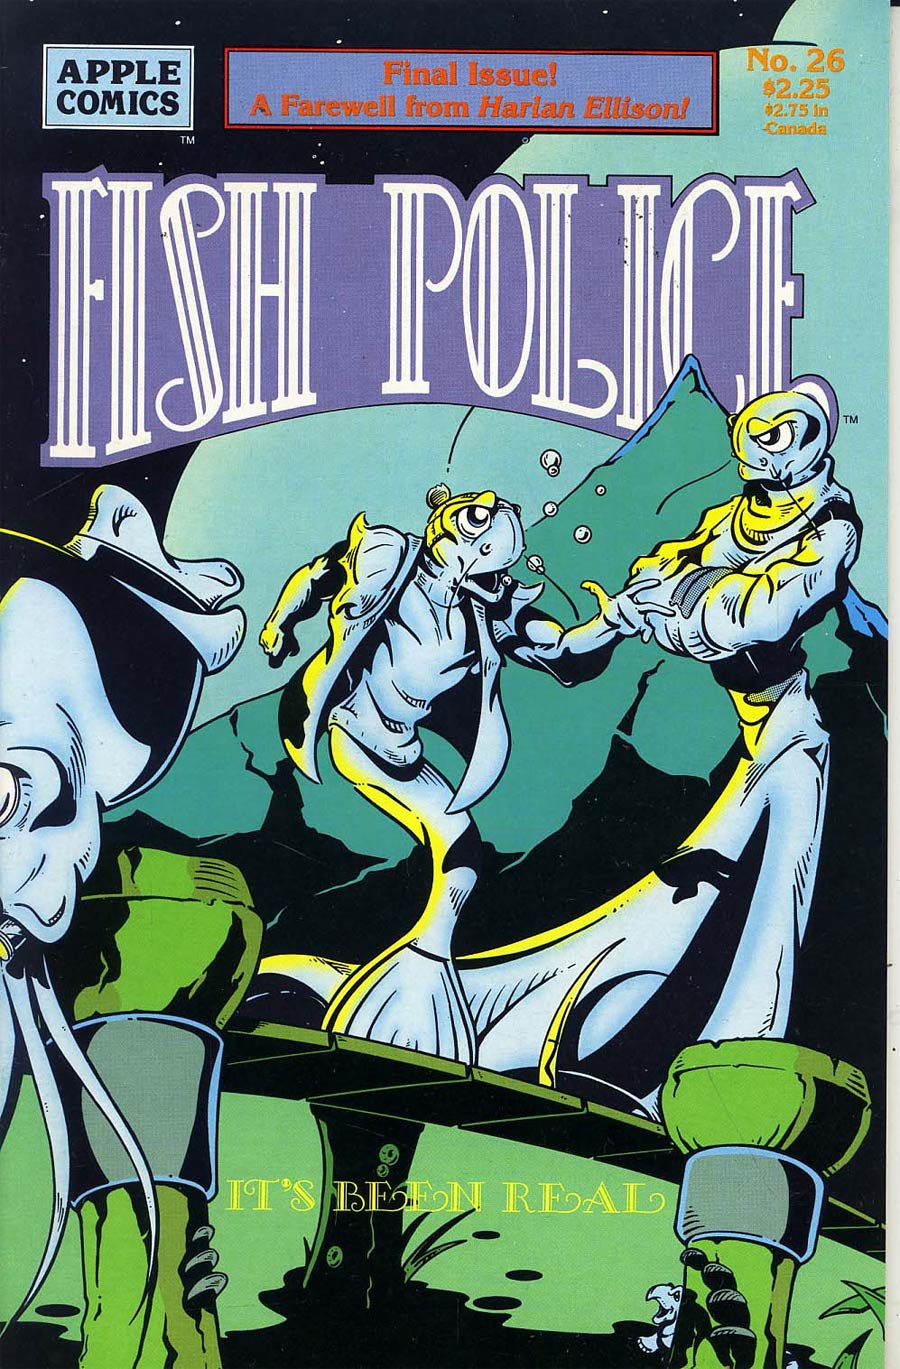 Fish Police Vol 2 #26